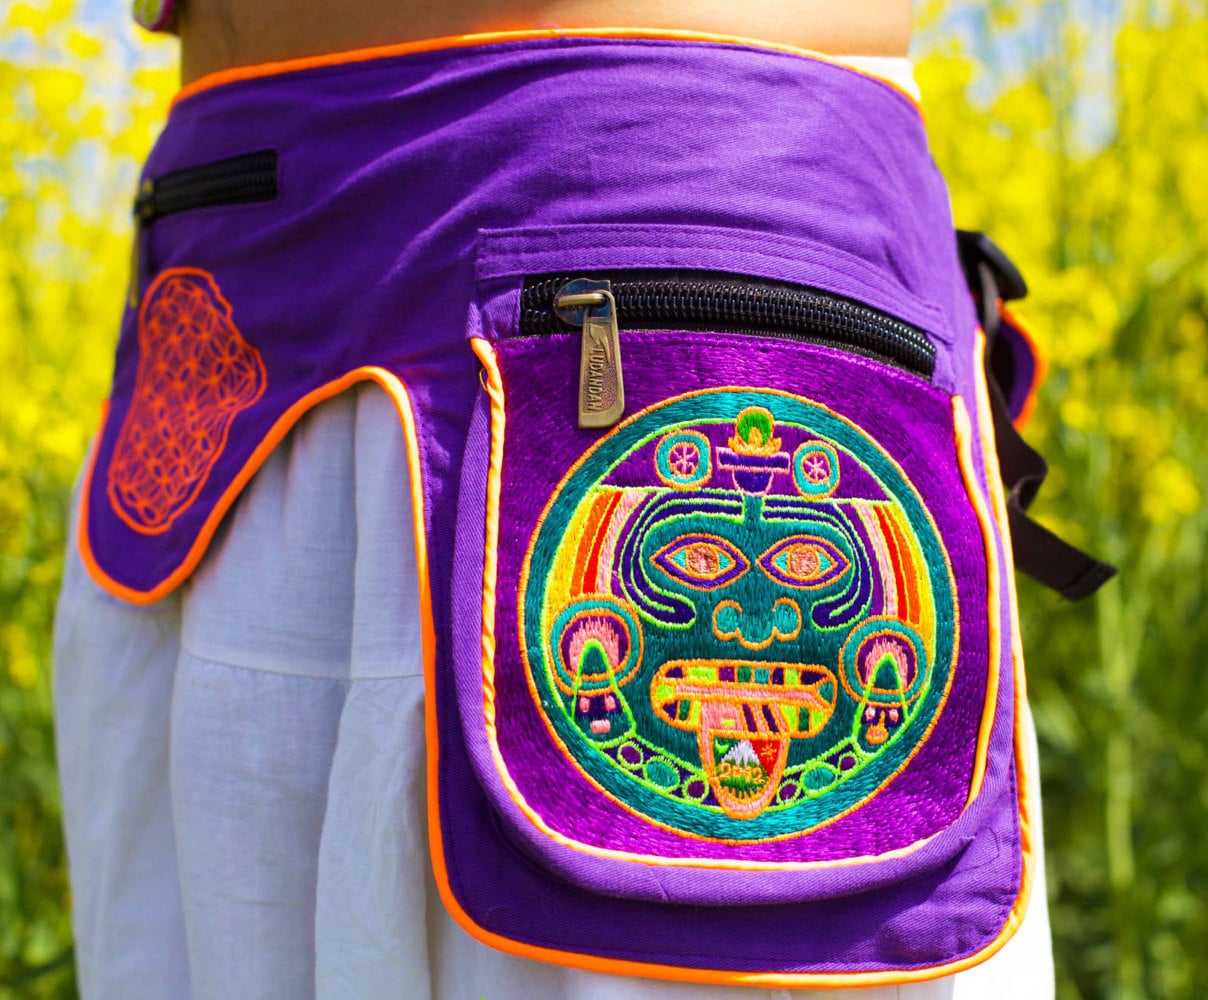 Beltbag purple Hofmann 2012 - 7 pockets, strong ziplocks, size adjustable with hook & loop and clip - blacklight active lines flower of life